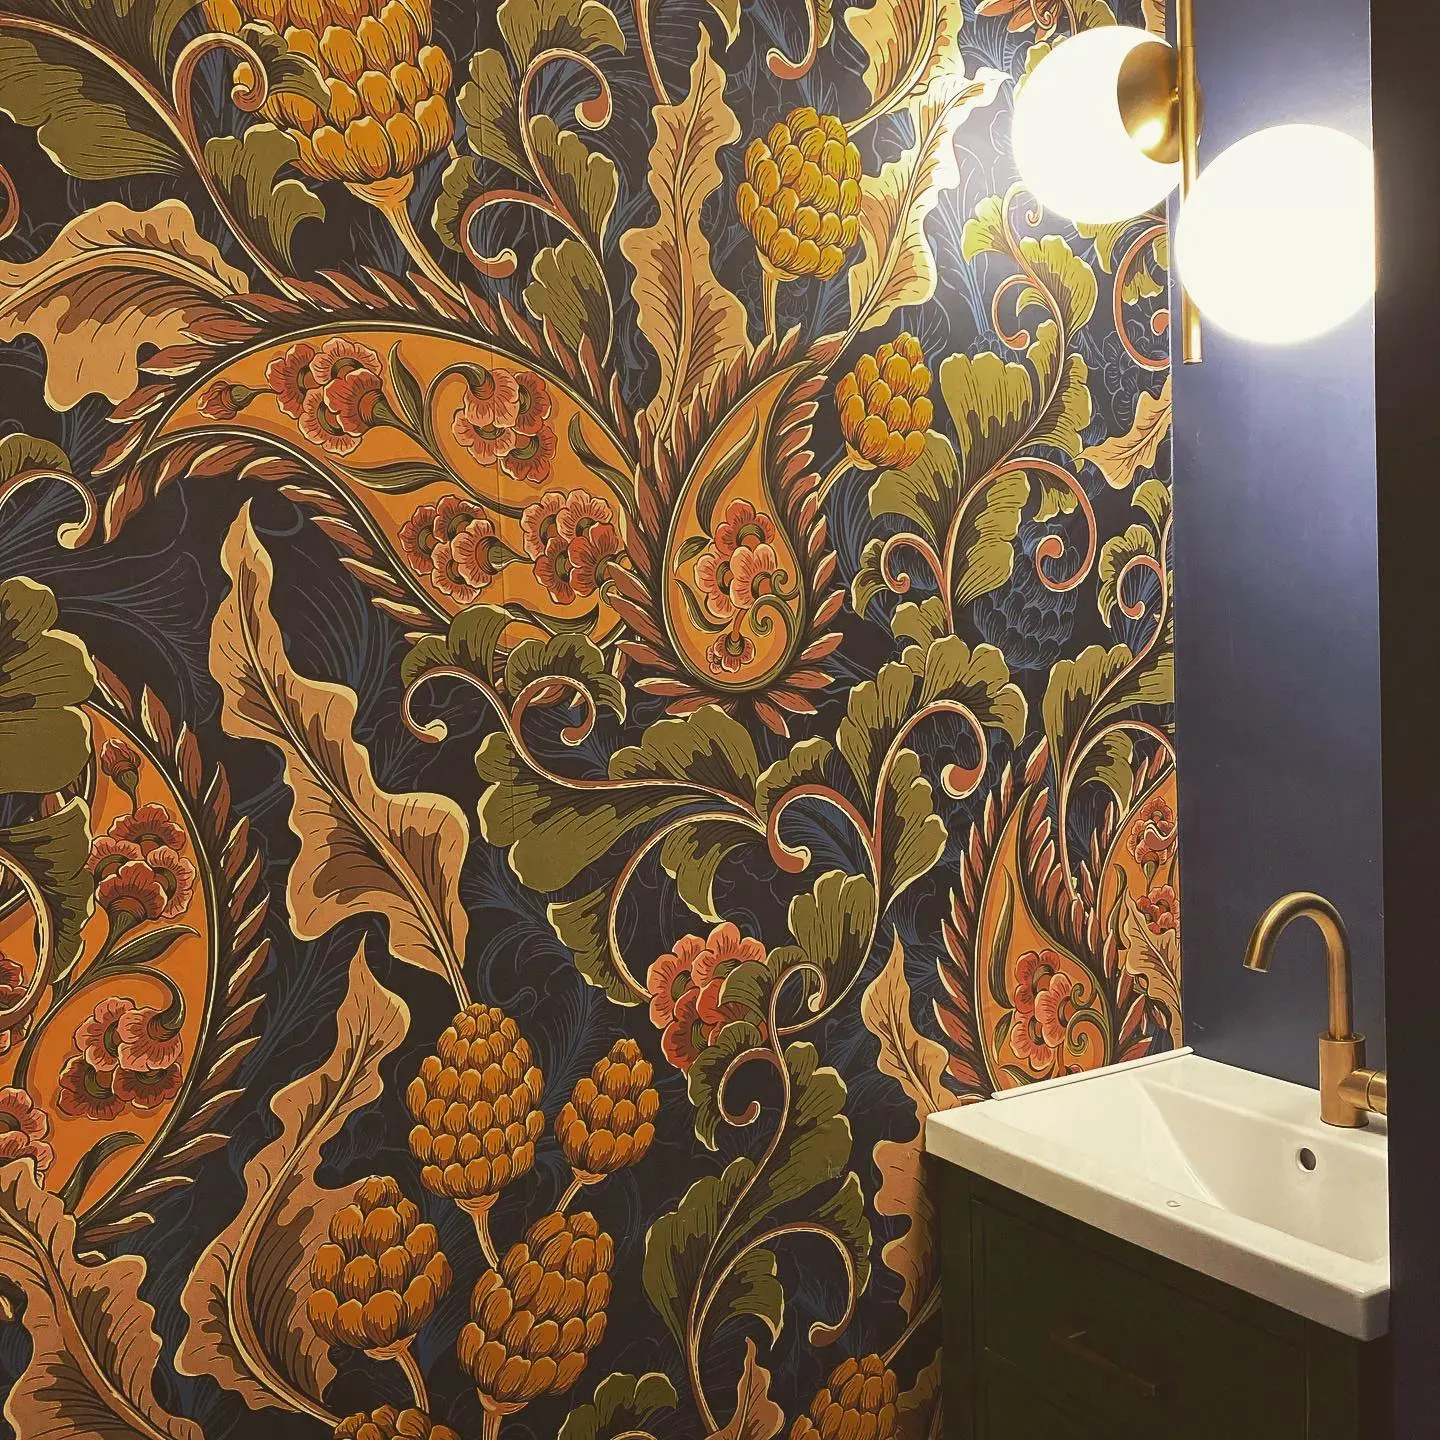 Benjamin Moore Stunning bathroom color